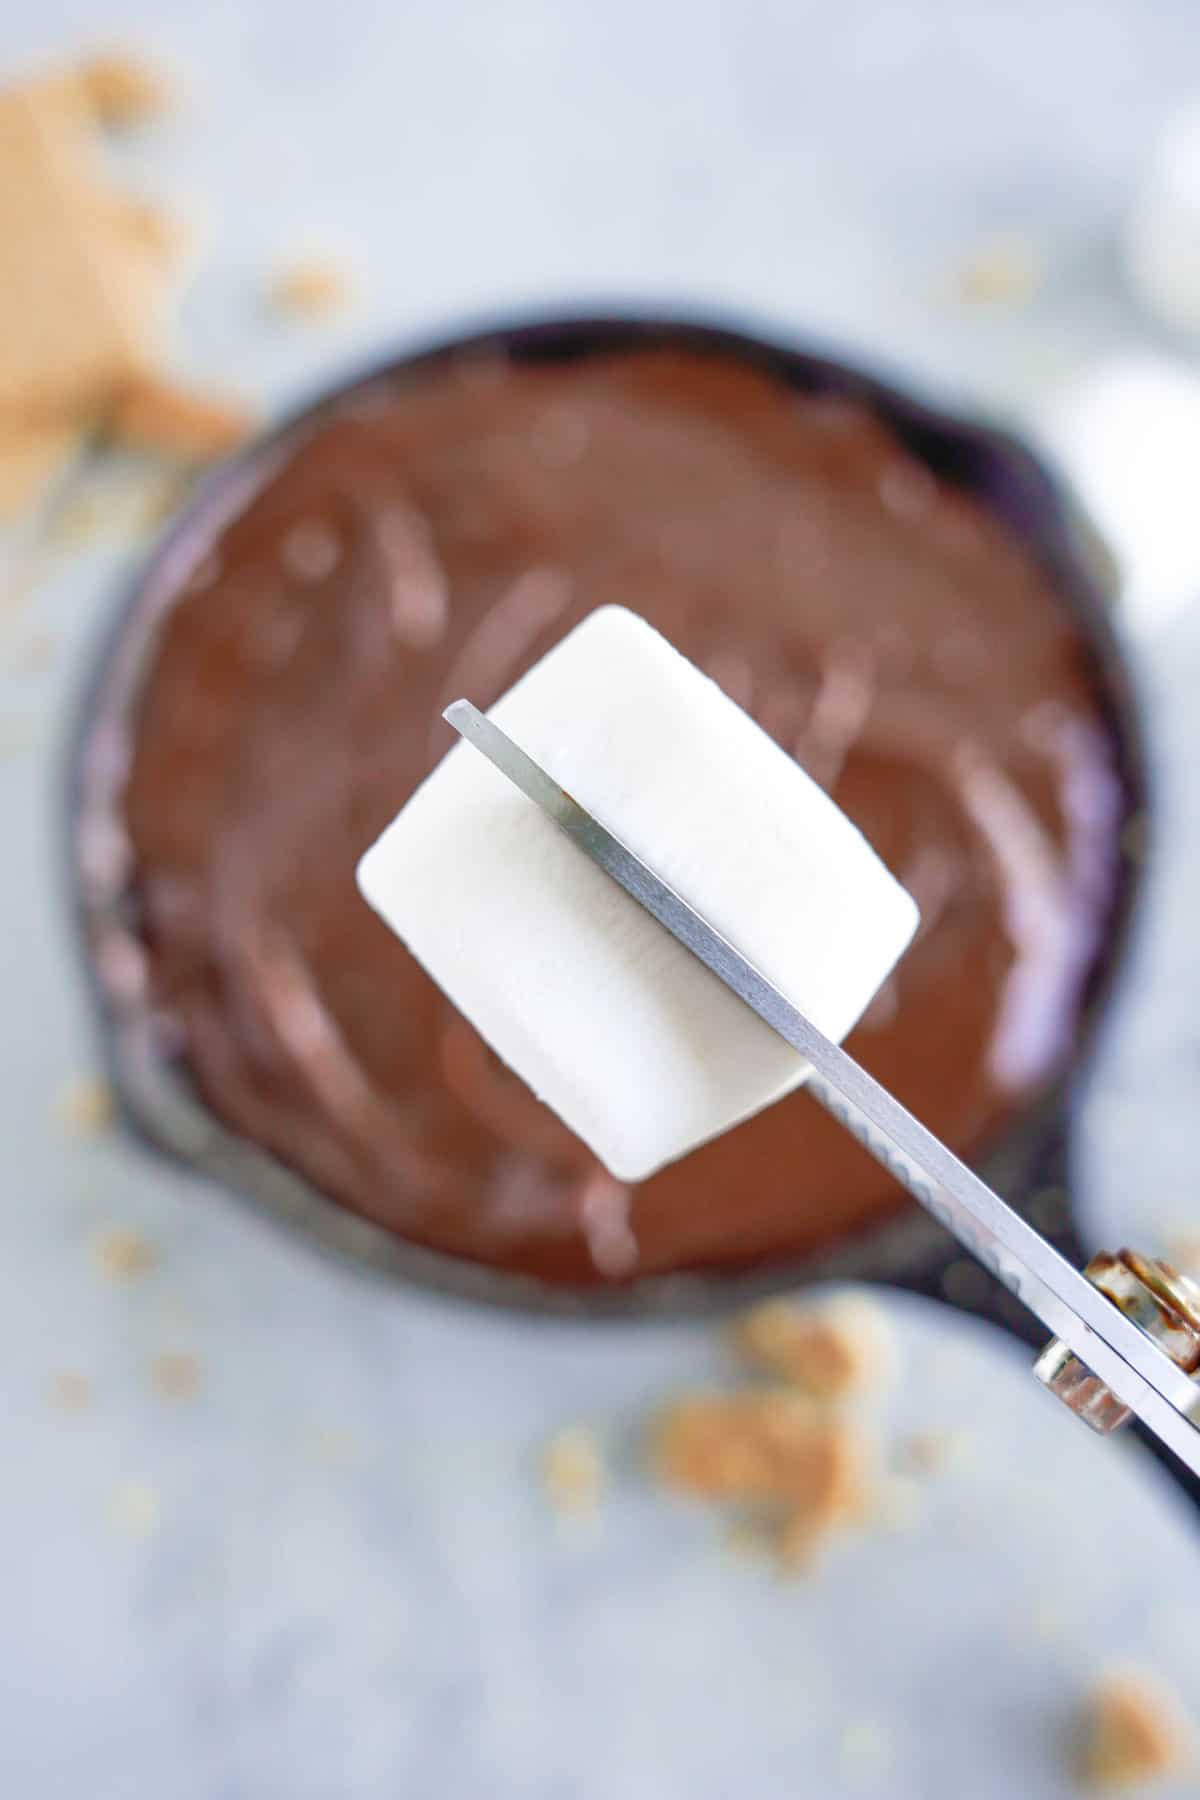 Halving Marshmallows to Top Smores Dip Recipe Before Baking